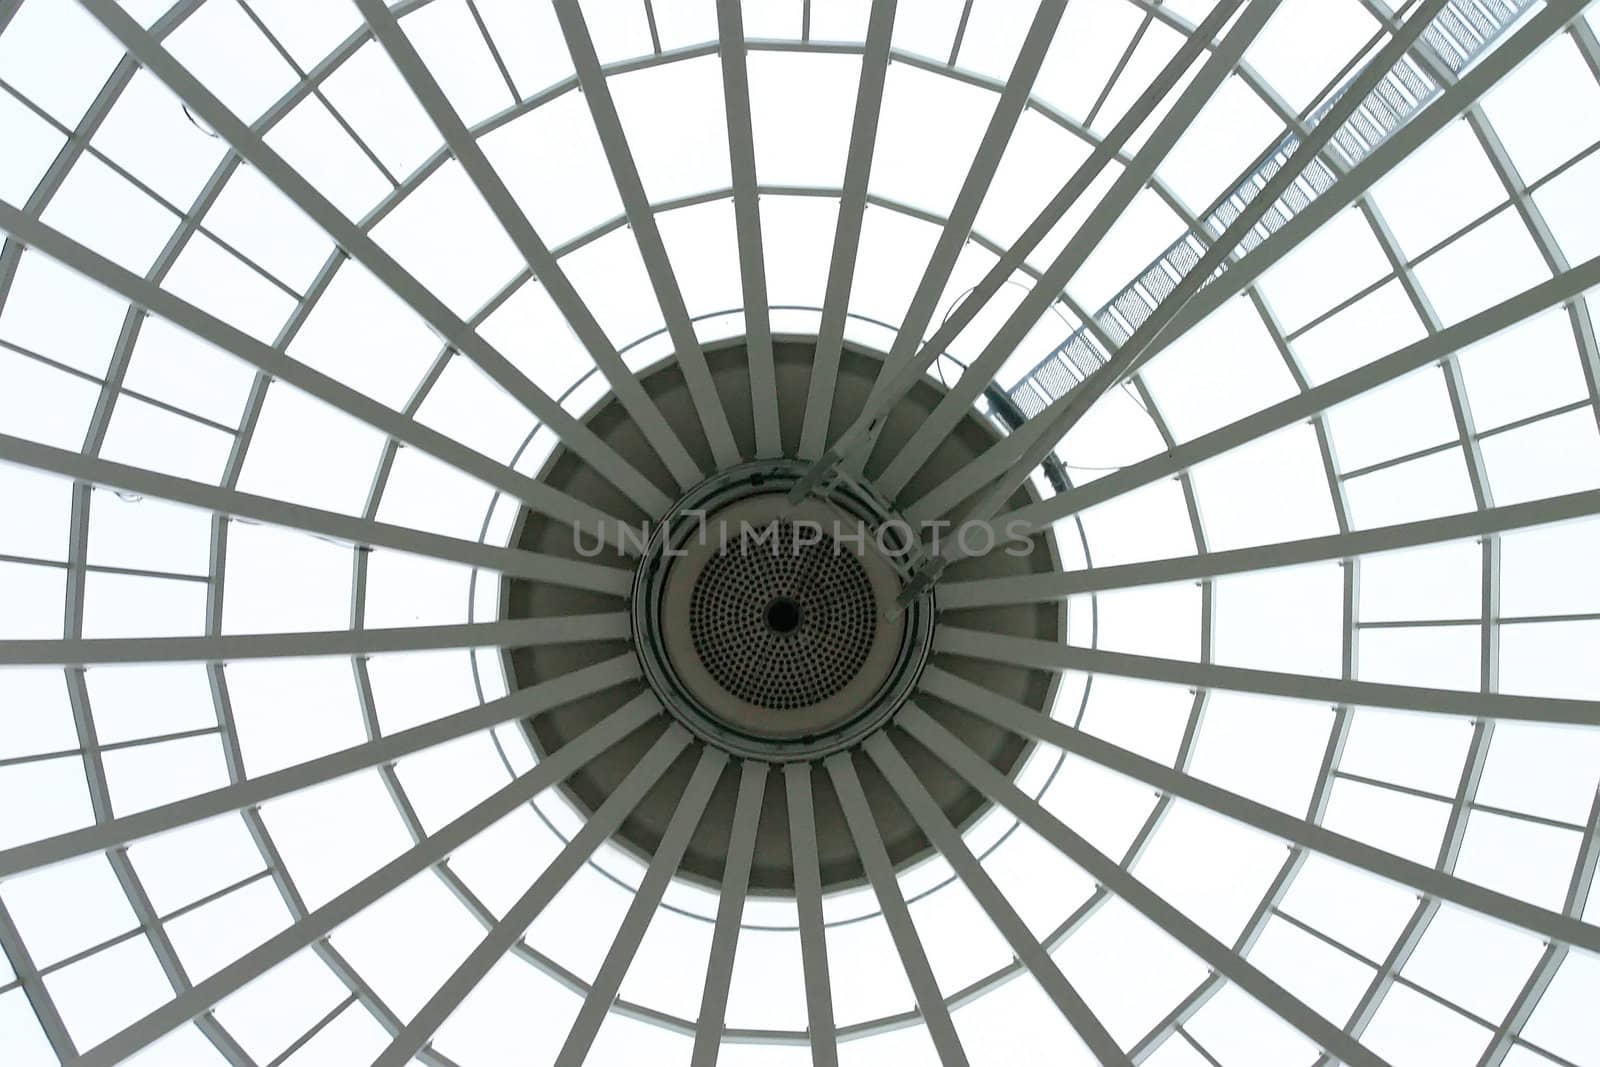 View upto peak of glass dome